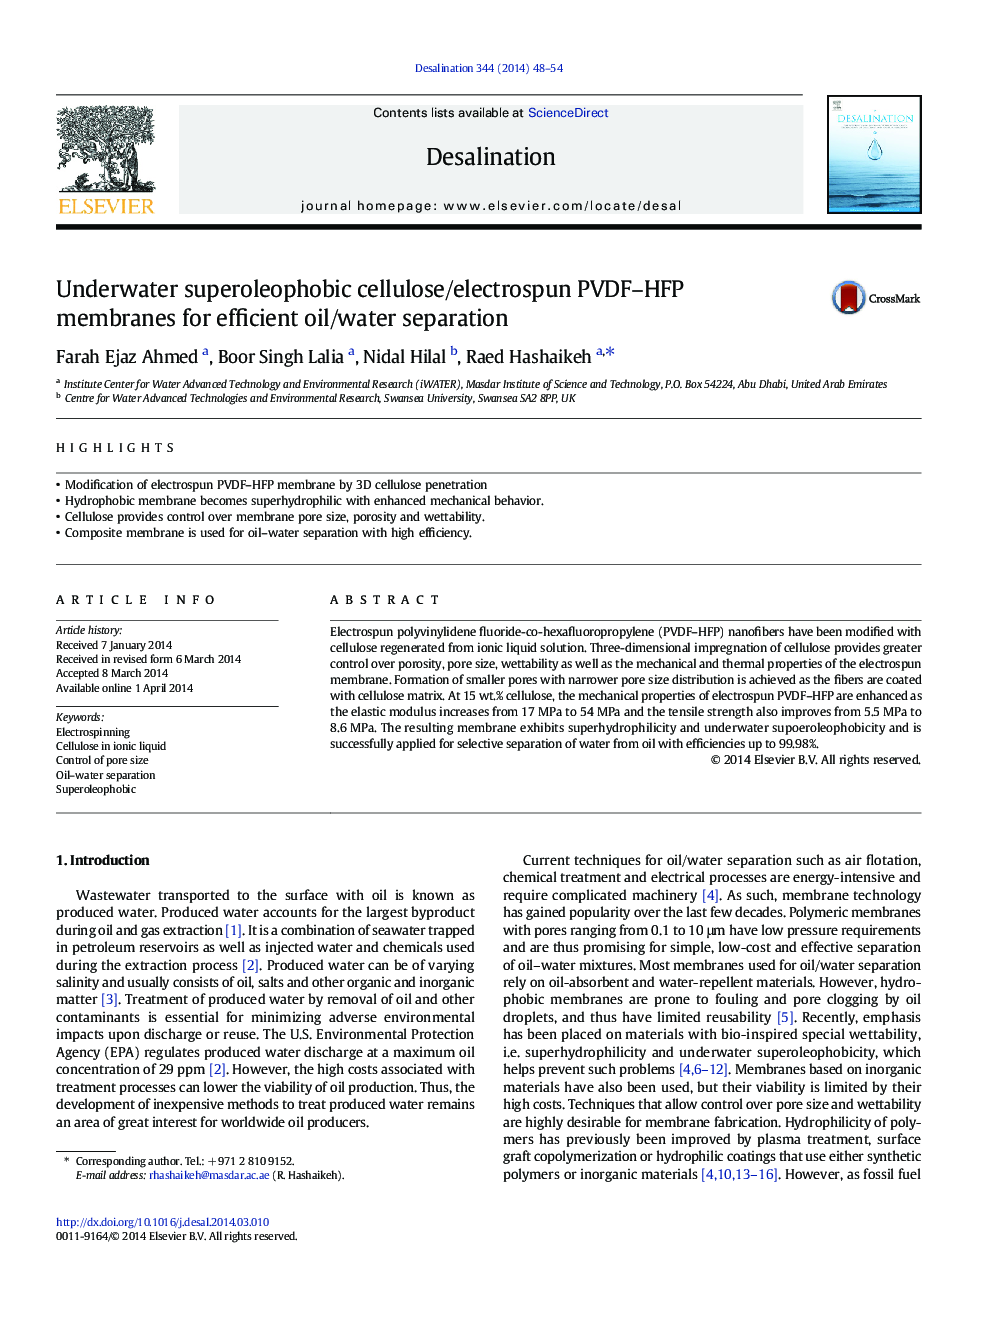 Underwater superoleophobic cellulose/electrospun PVDF-HFP membranes for efficient oil/water separation